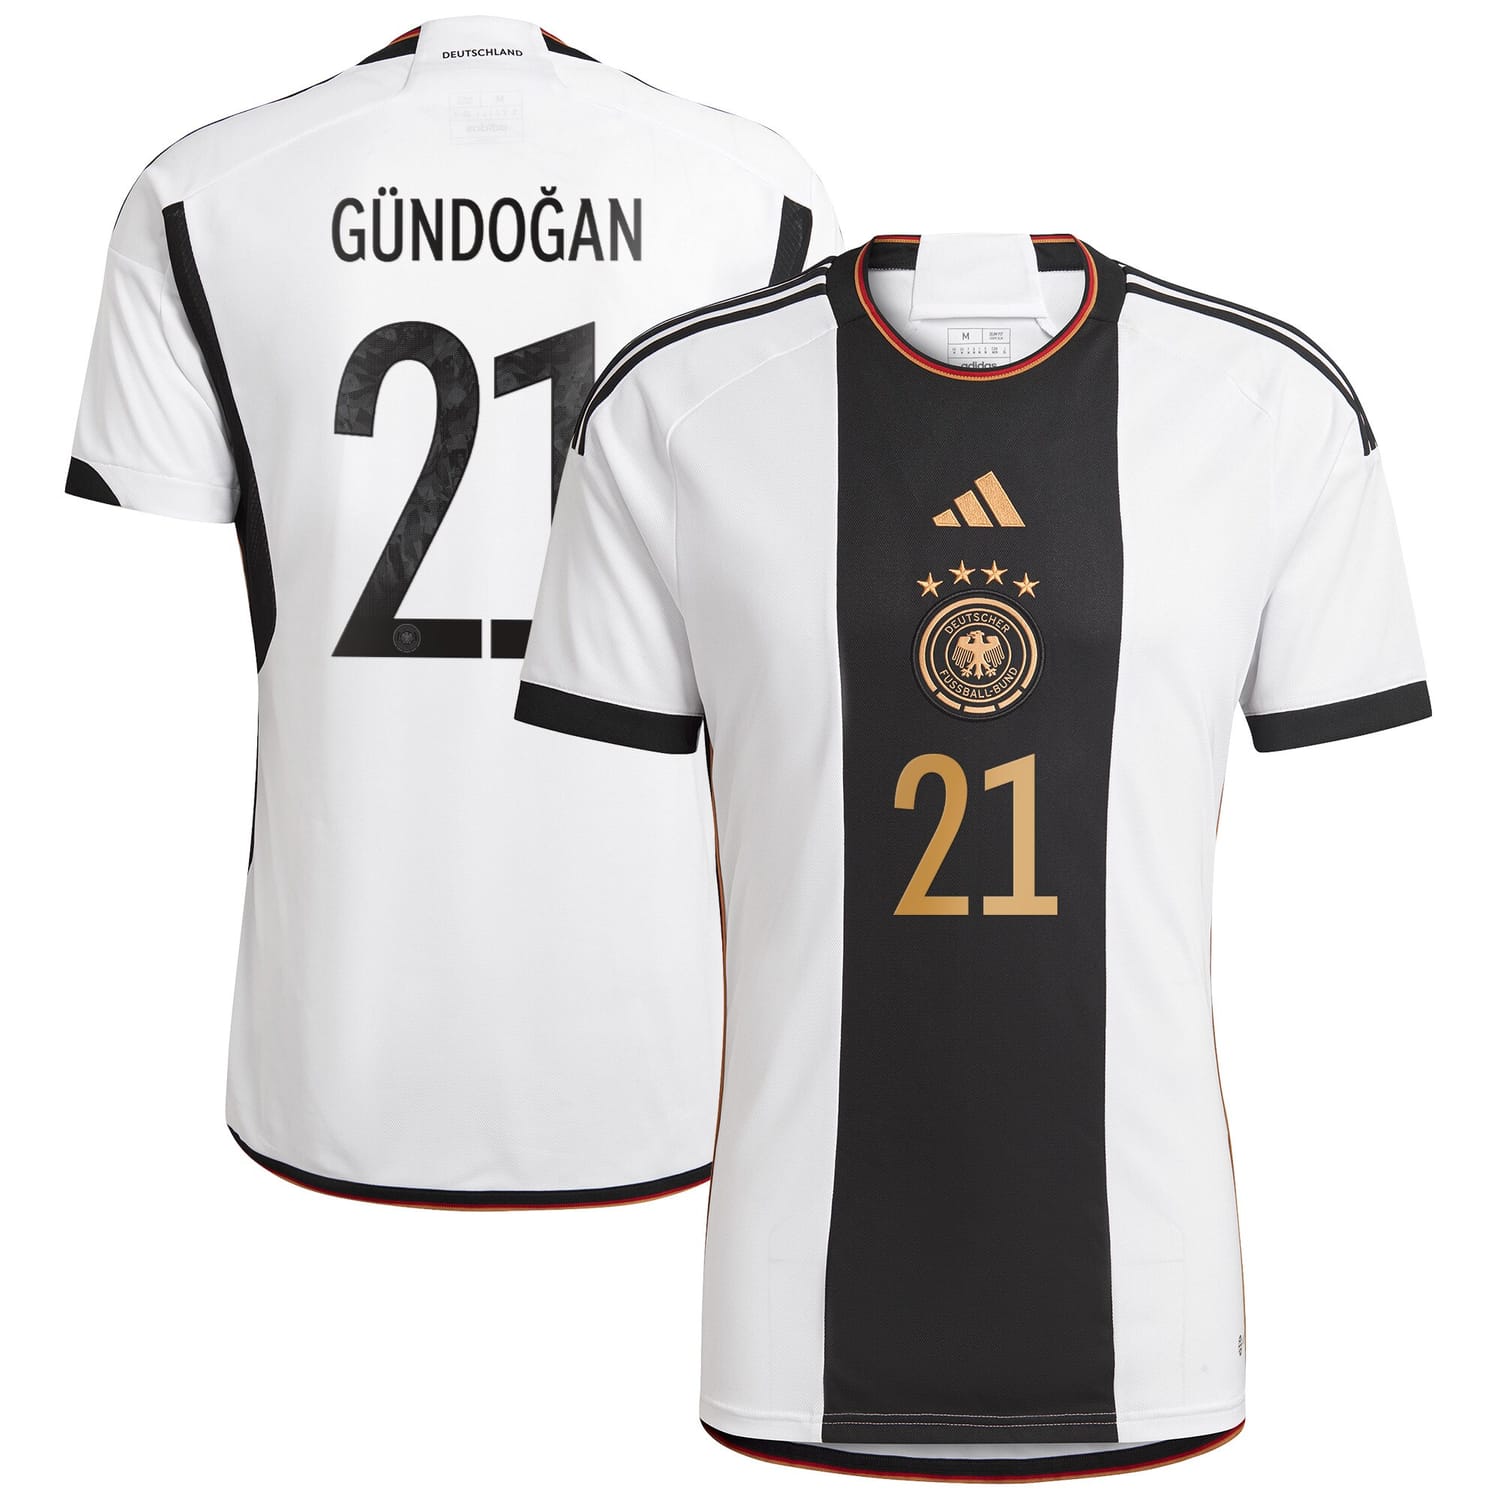 Germany National Team Home Jersey Shirt player Ilkay Gündogan 21 printing for Men